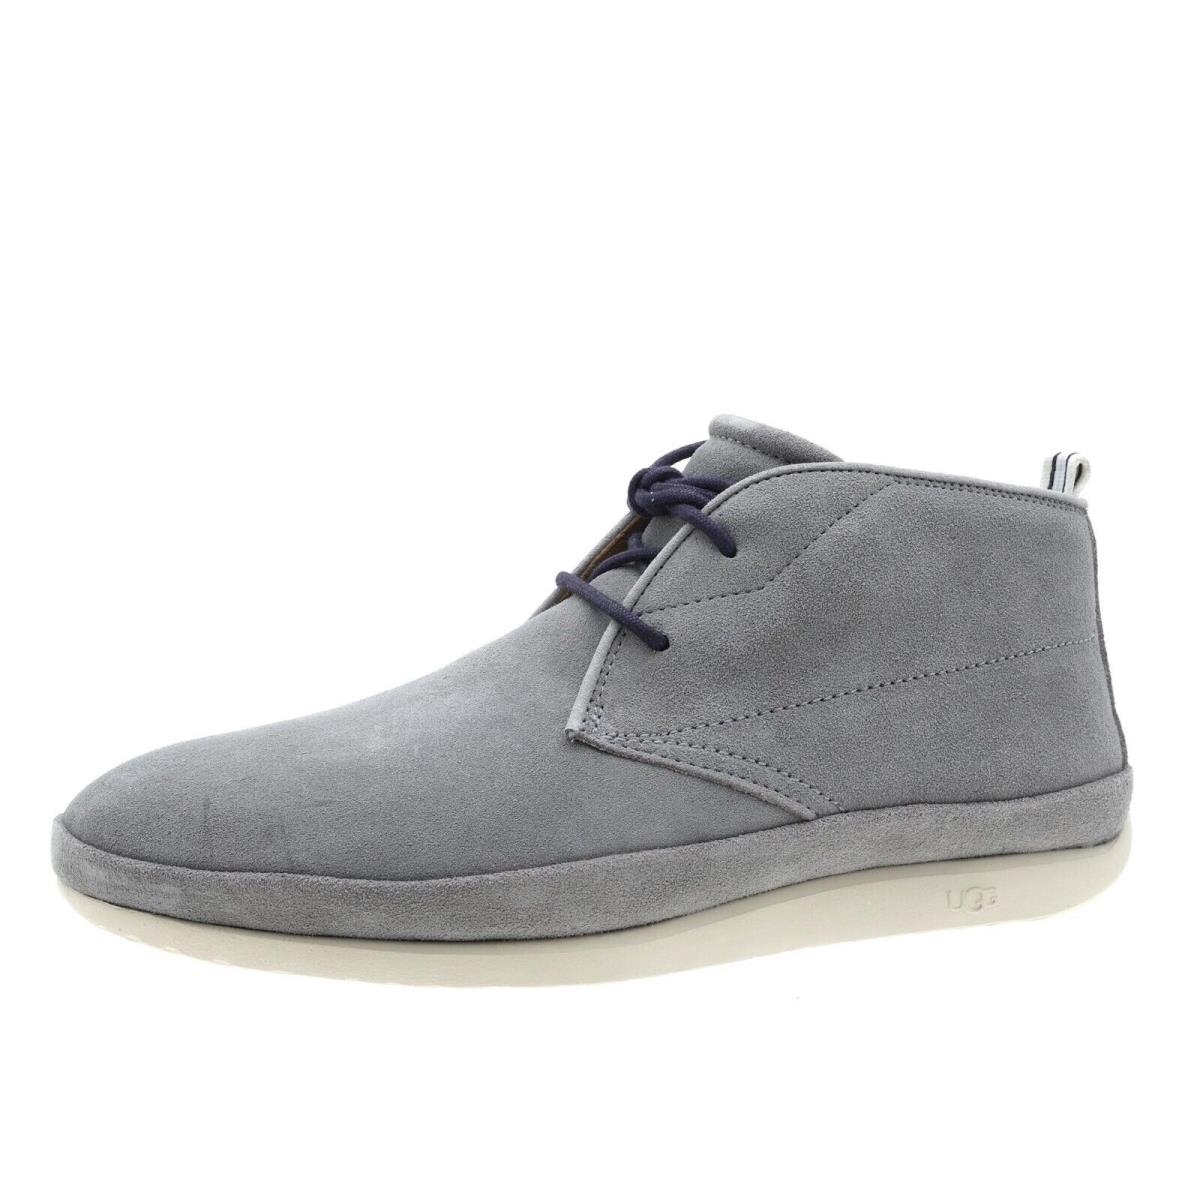 Ugg N3470 Cali Chukka Seal Men s Grey Shoes Size US 8 EU 40.5 - Gray